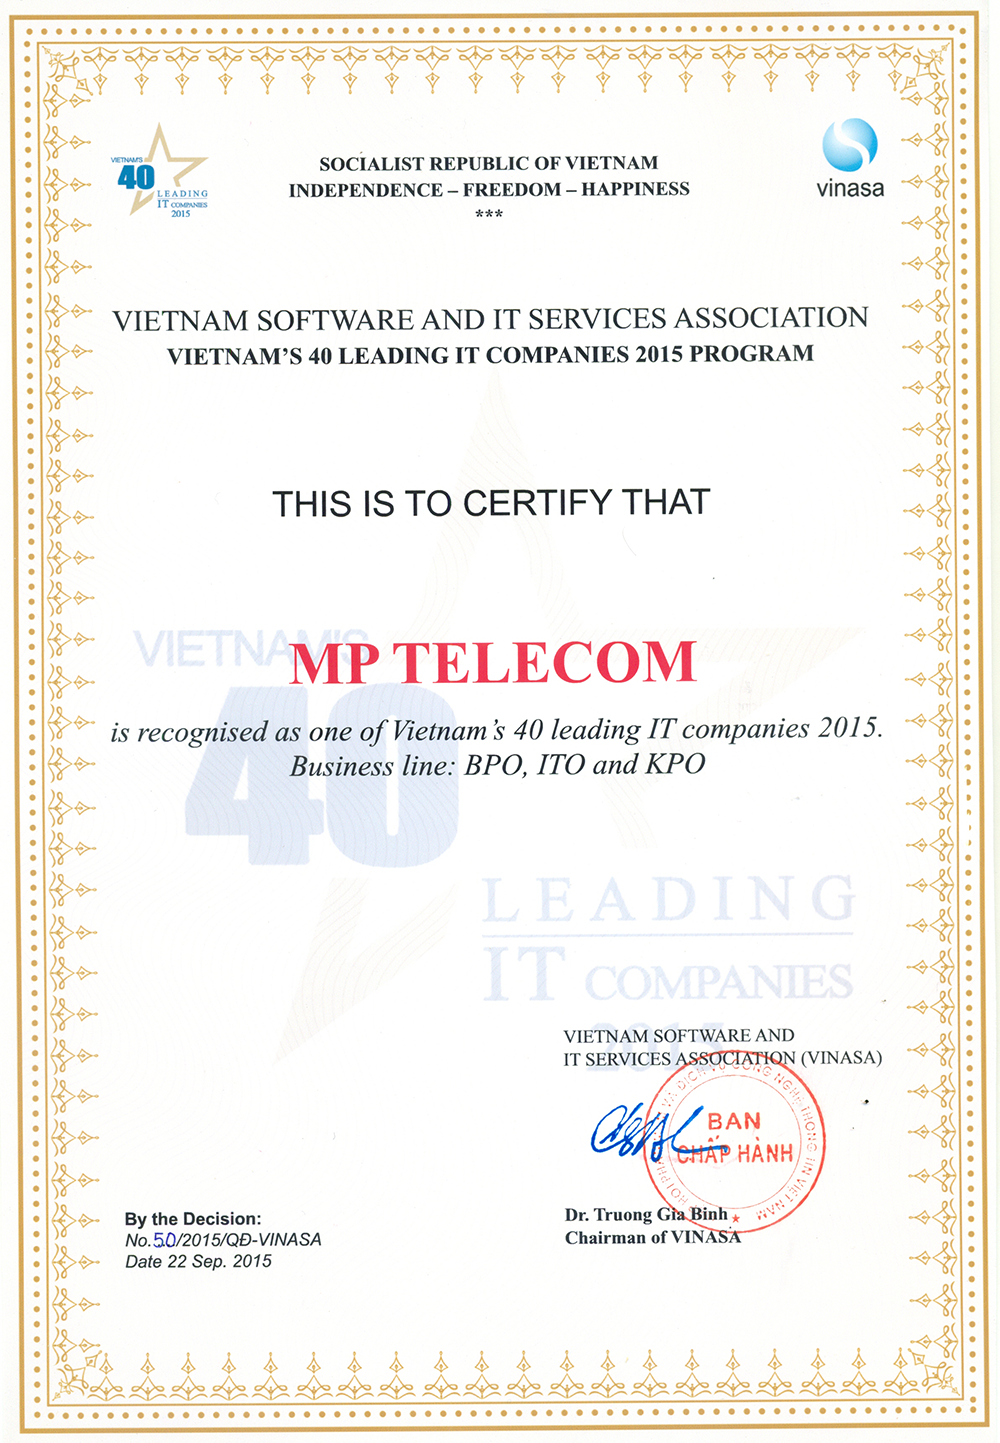 MPTelecomInVietnam’sLeadingITCompanies